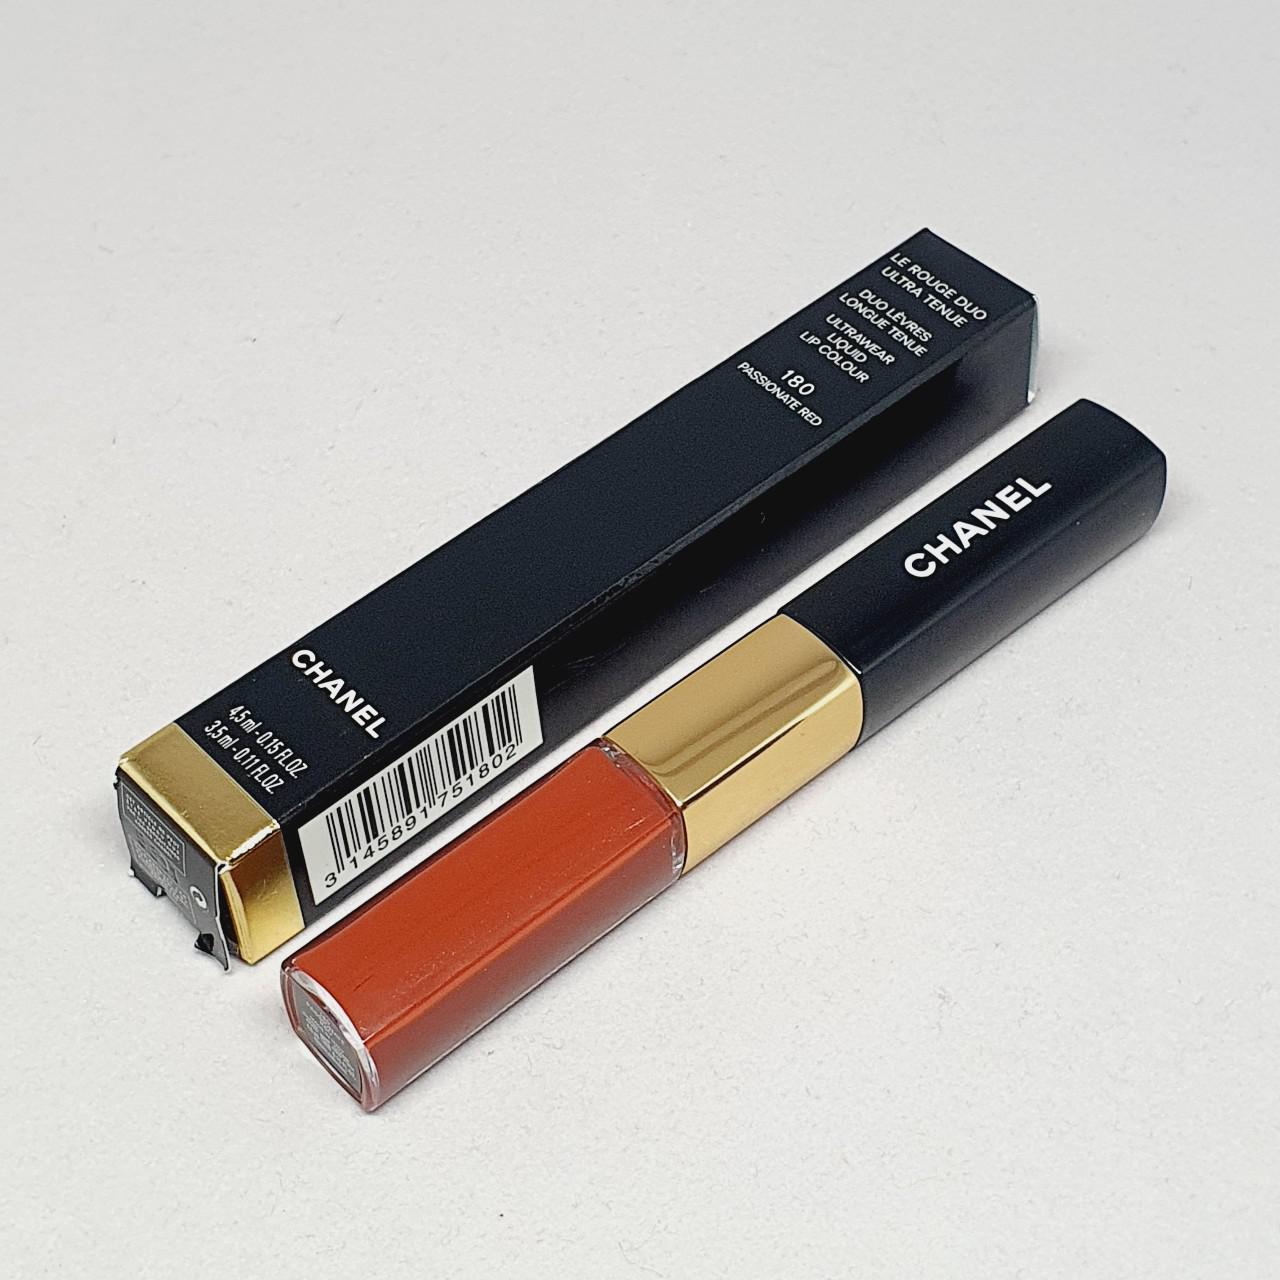 Chanel Ultrawear Duo Liquid Lip Colour Lipstick 180 - Depop